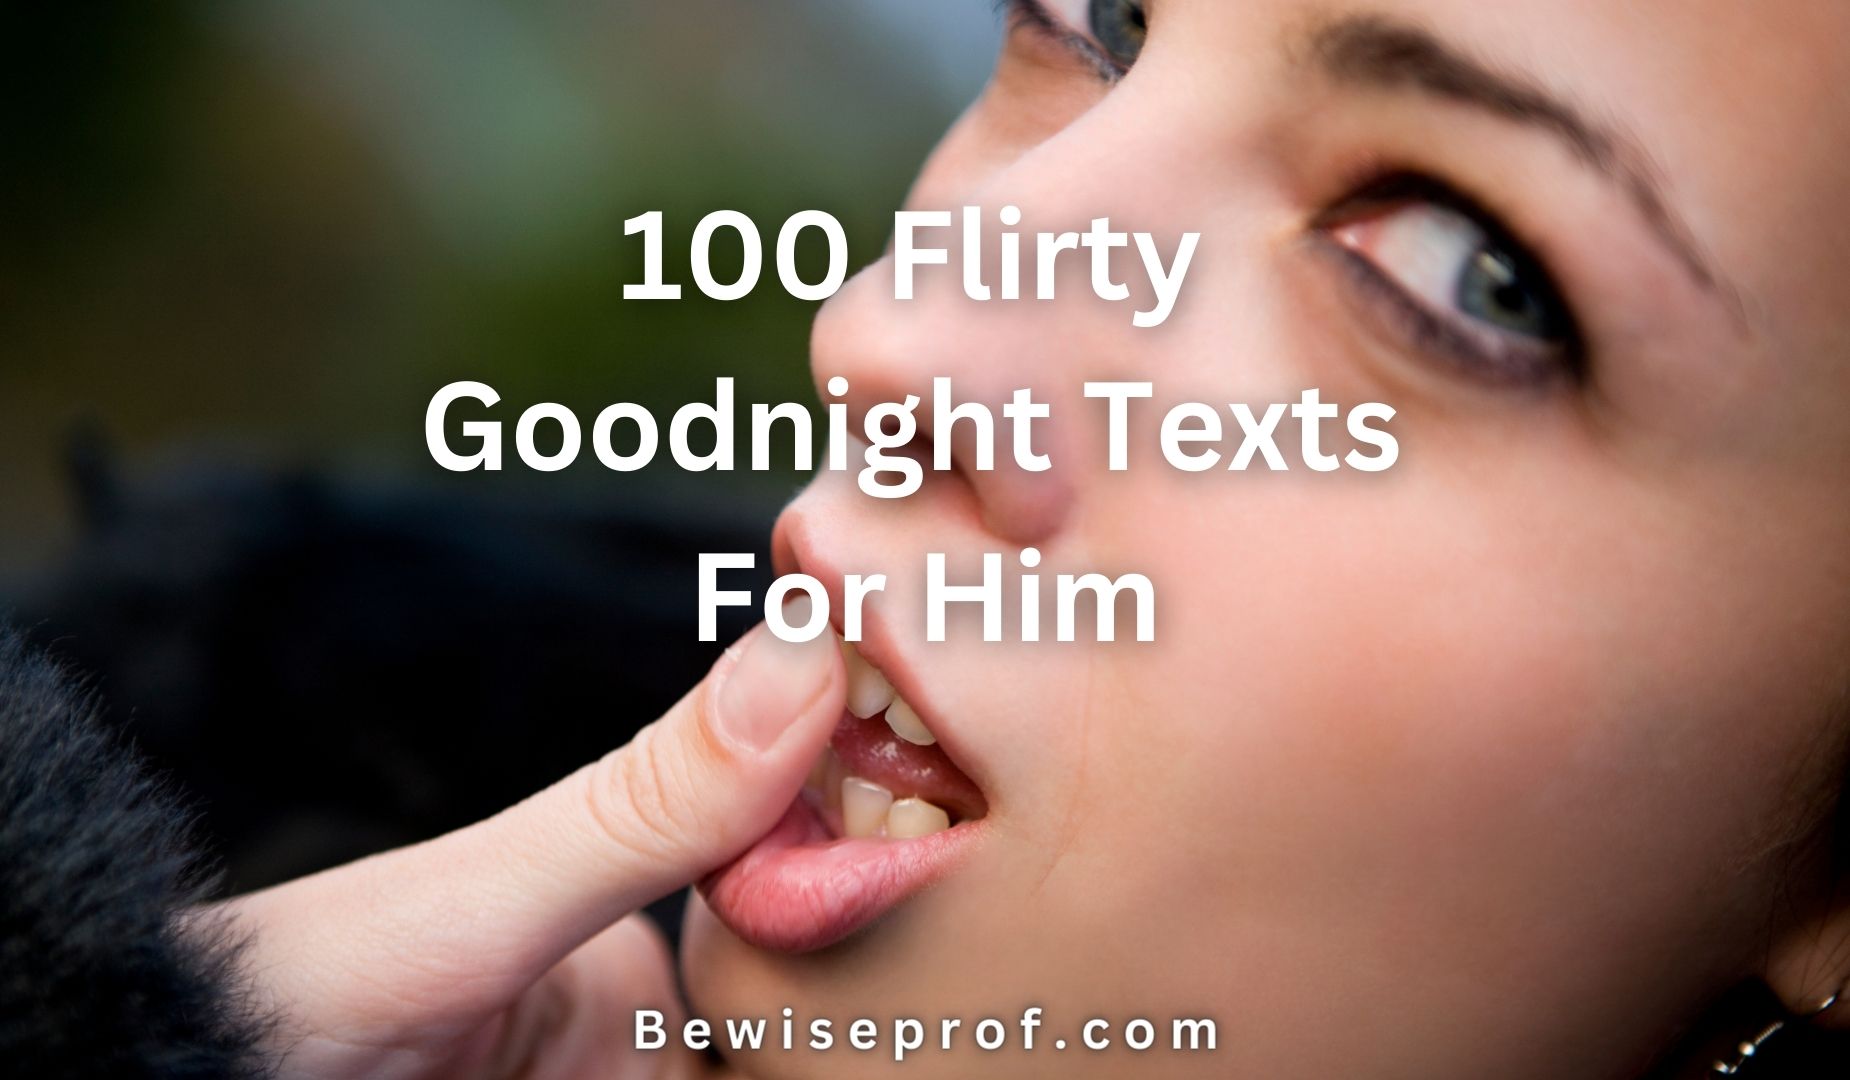 100 Flirty Goodnight Texts For Him